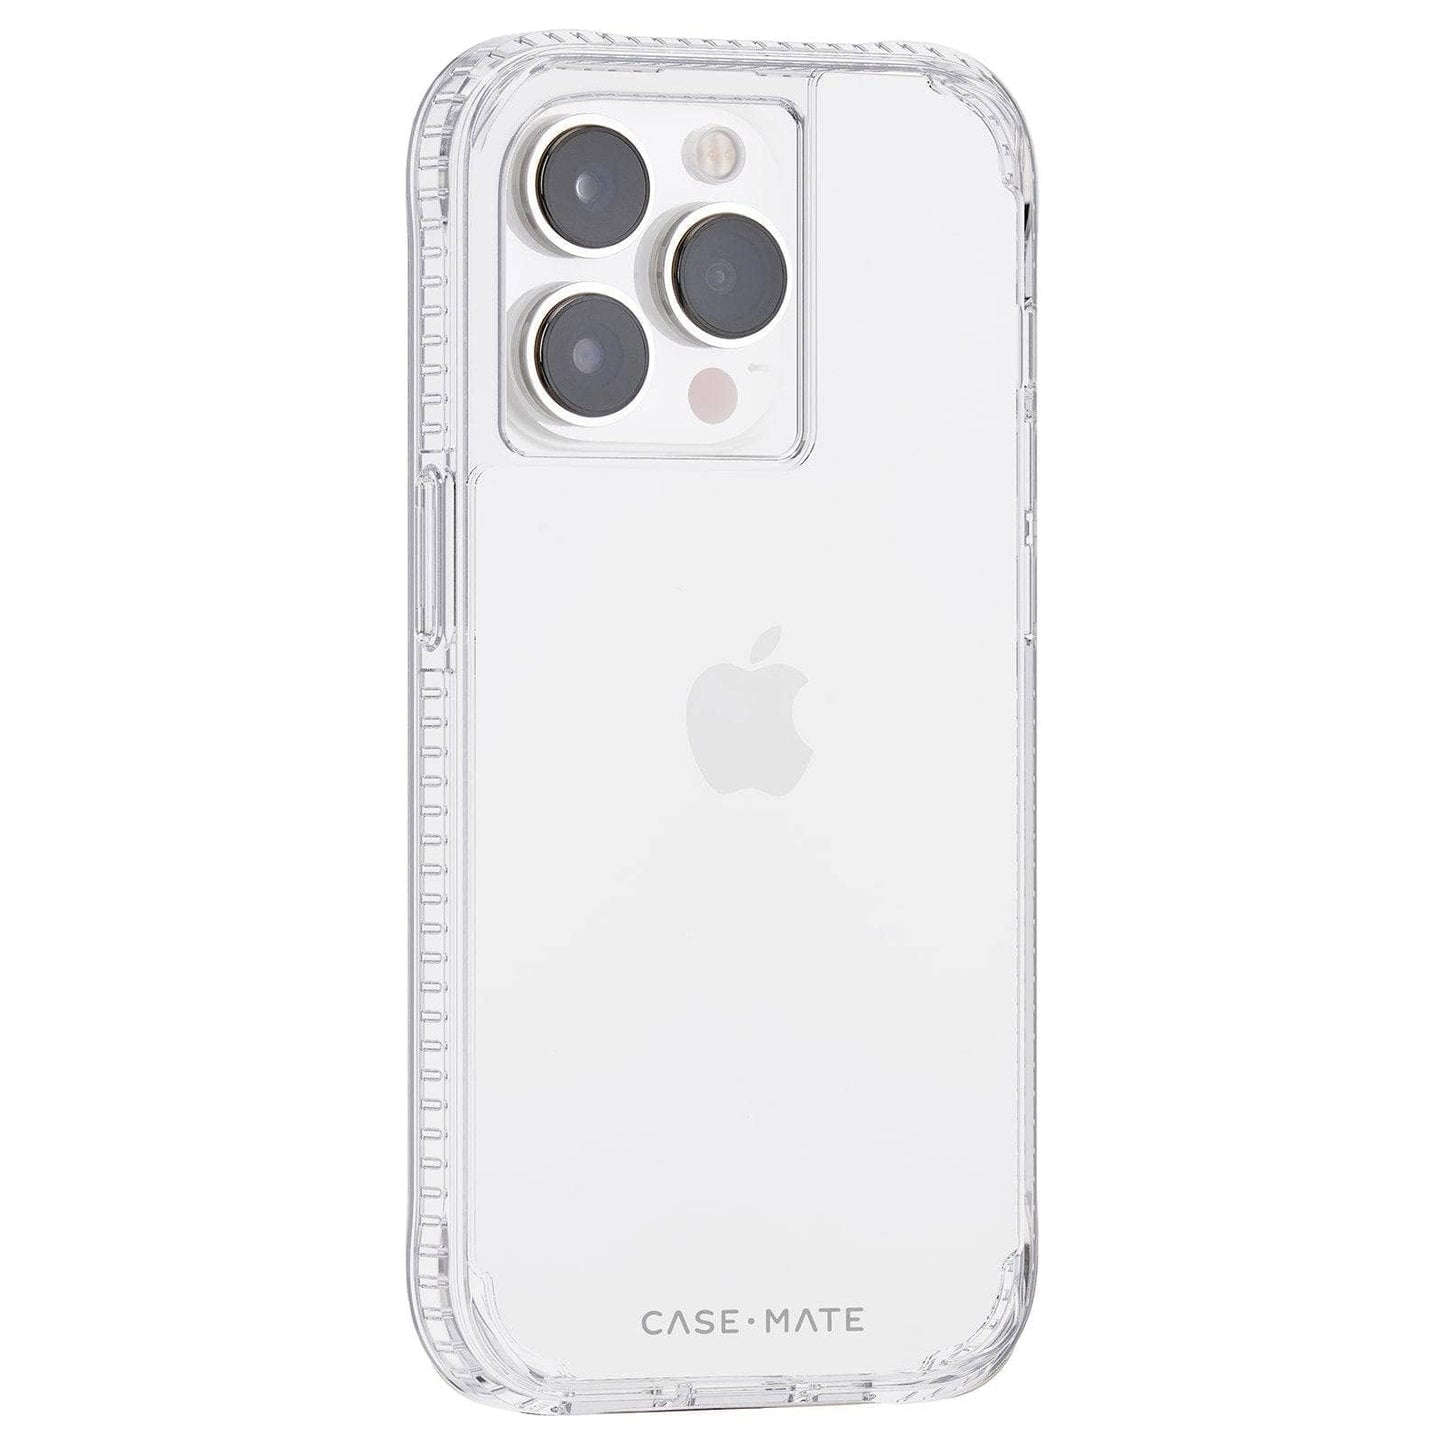 Case-Mate Tough Clear Plus Case - Antimicrobial - For iPhone 14 Pro (6.1")-Cases - Cases-CASE-MATE-www.PhoneGuy.com.au